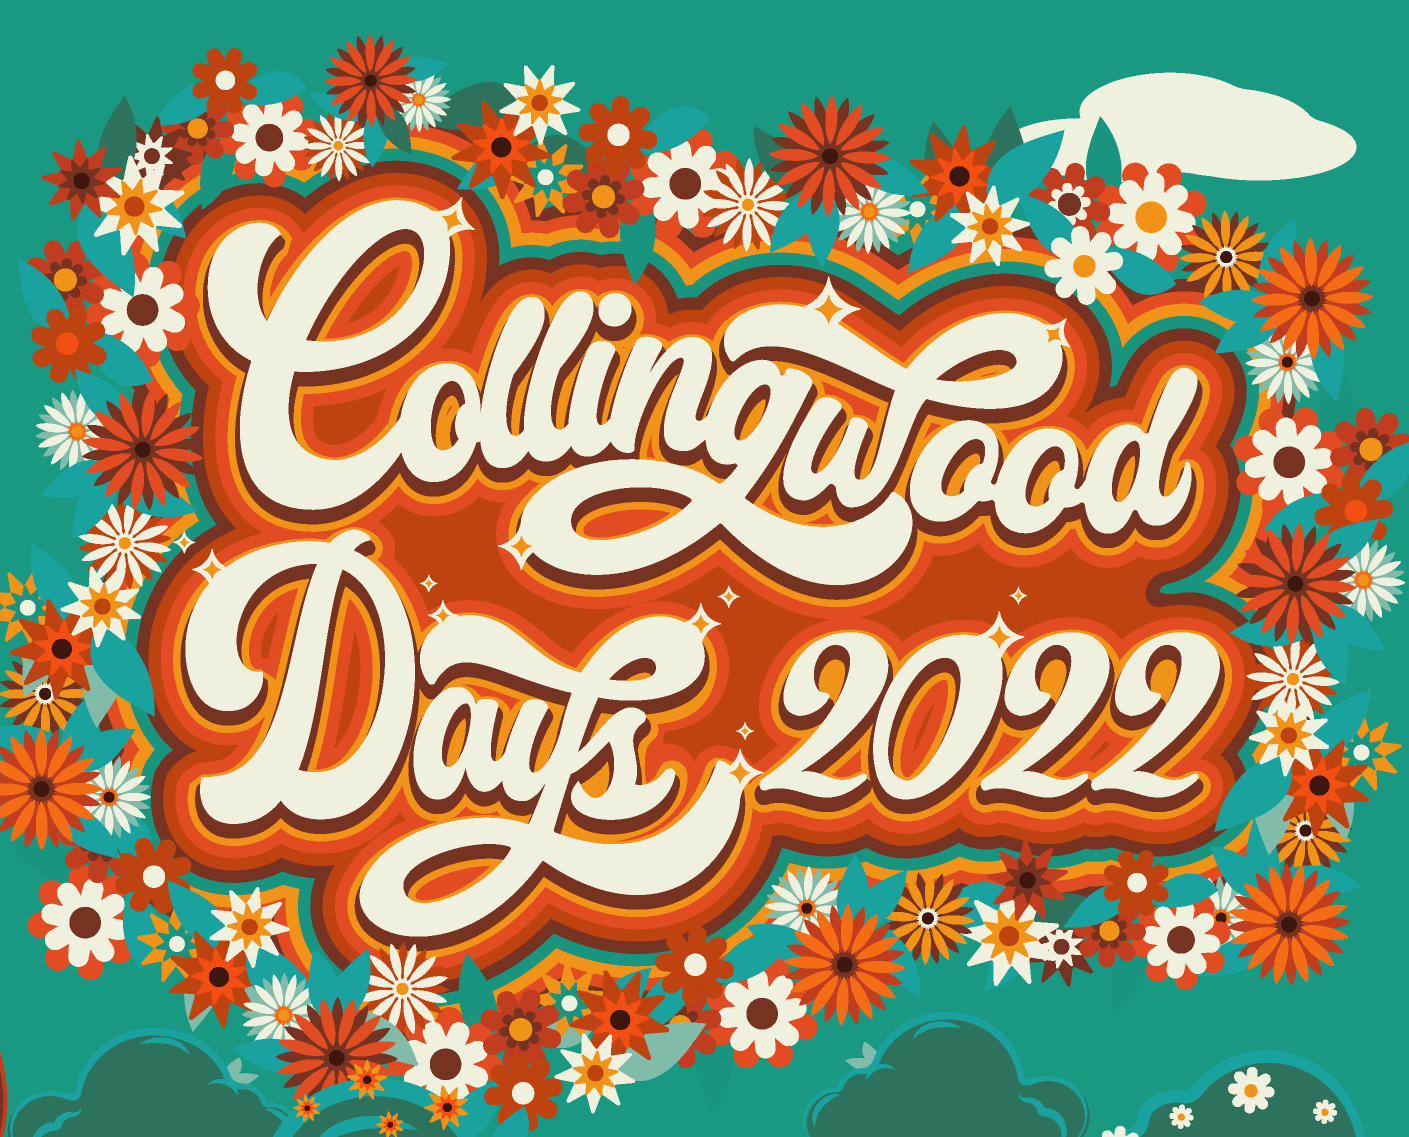 Collingwood Days 2021 logo